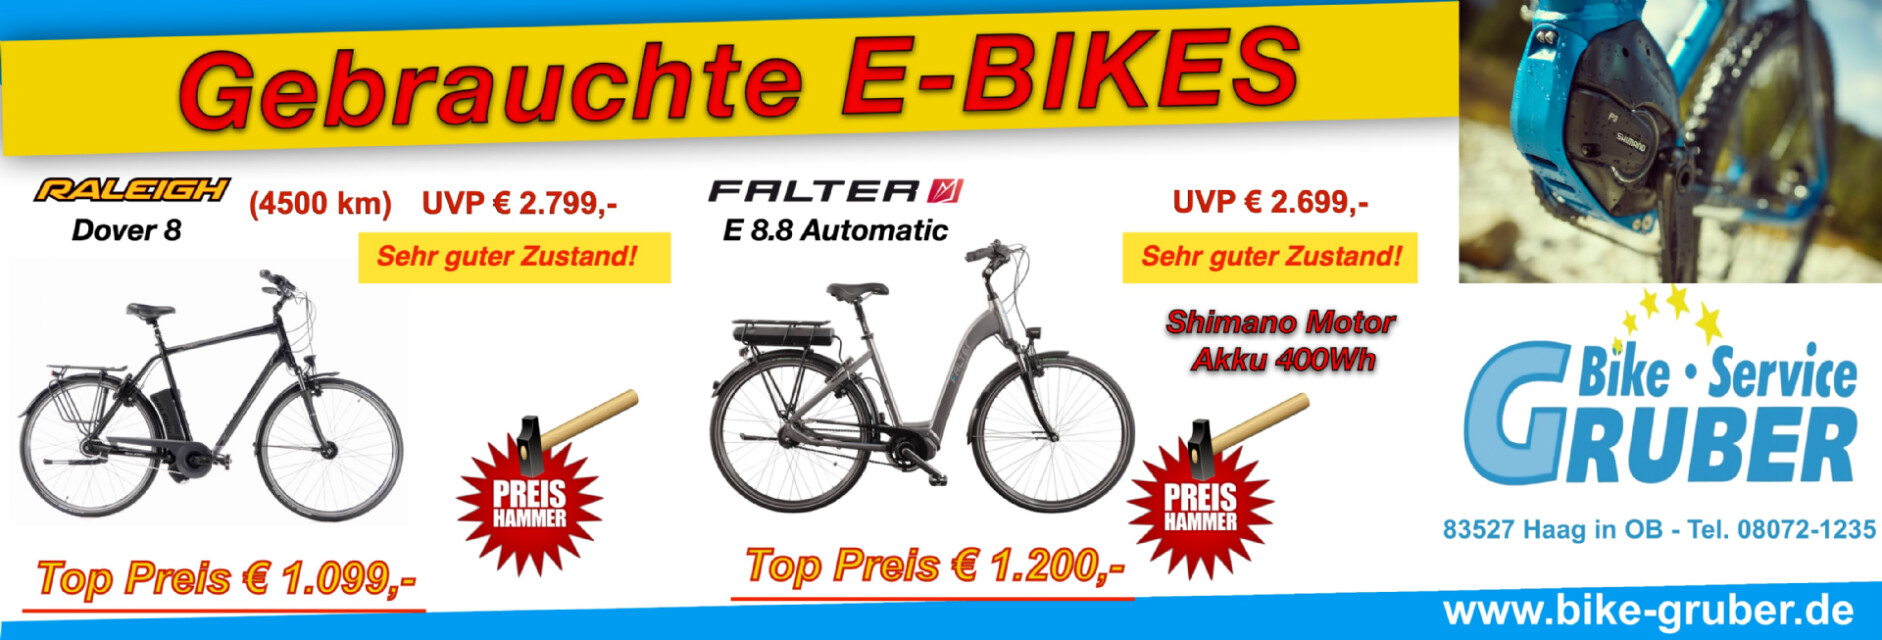 Gebrauchte E-Bikes